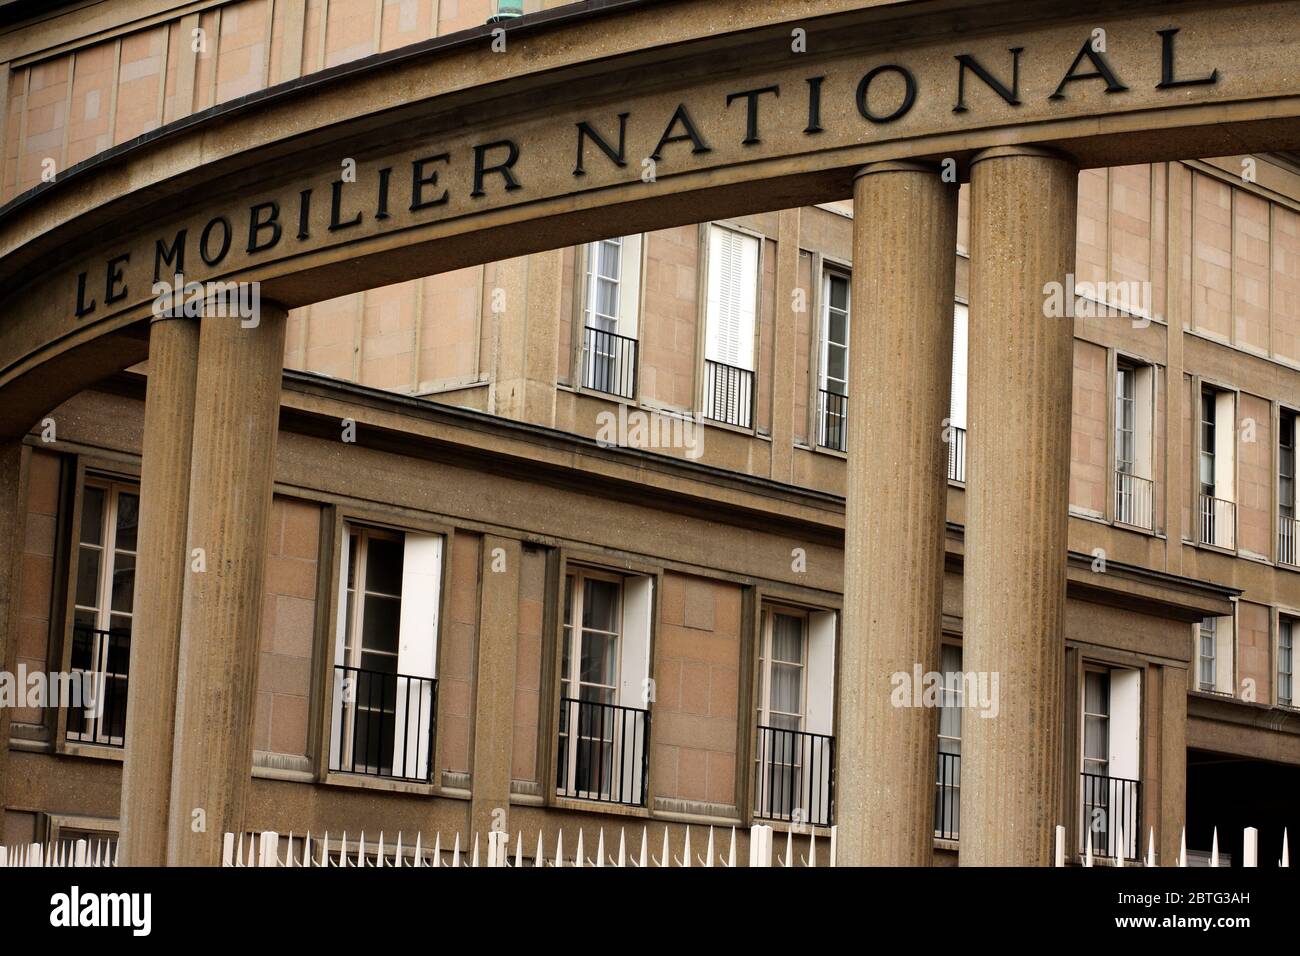 Le Mobilier National, Paris, France, arch. A. PERRET Stock Photo